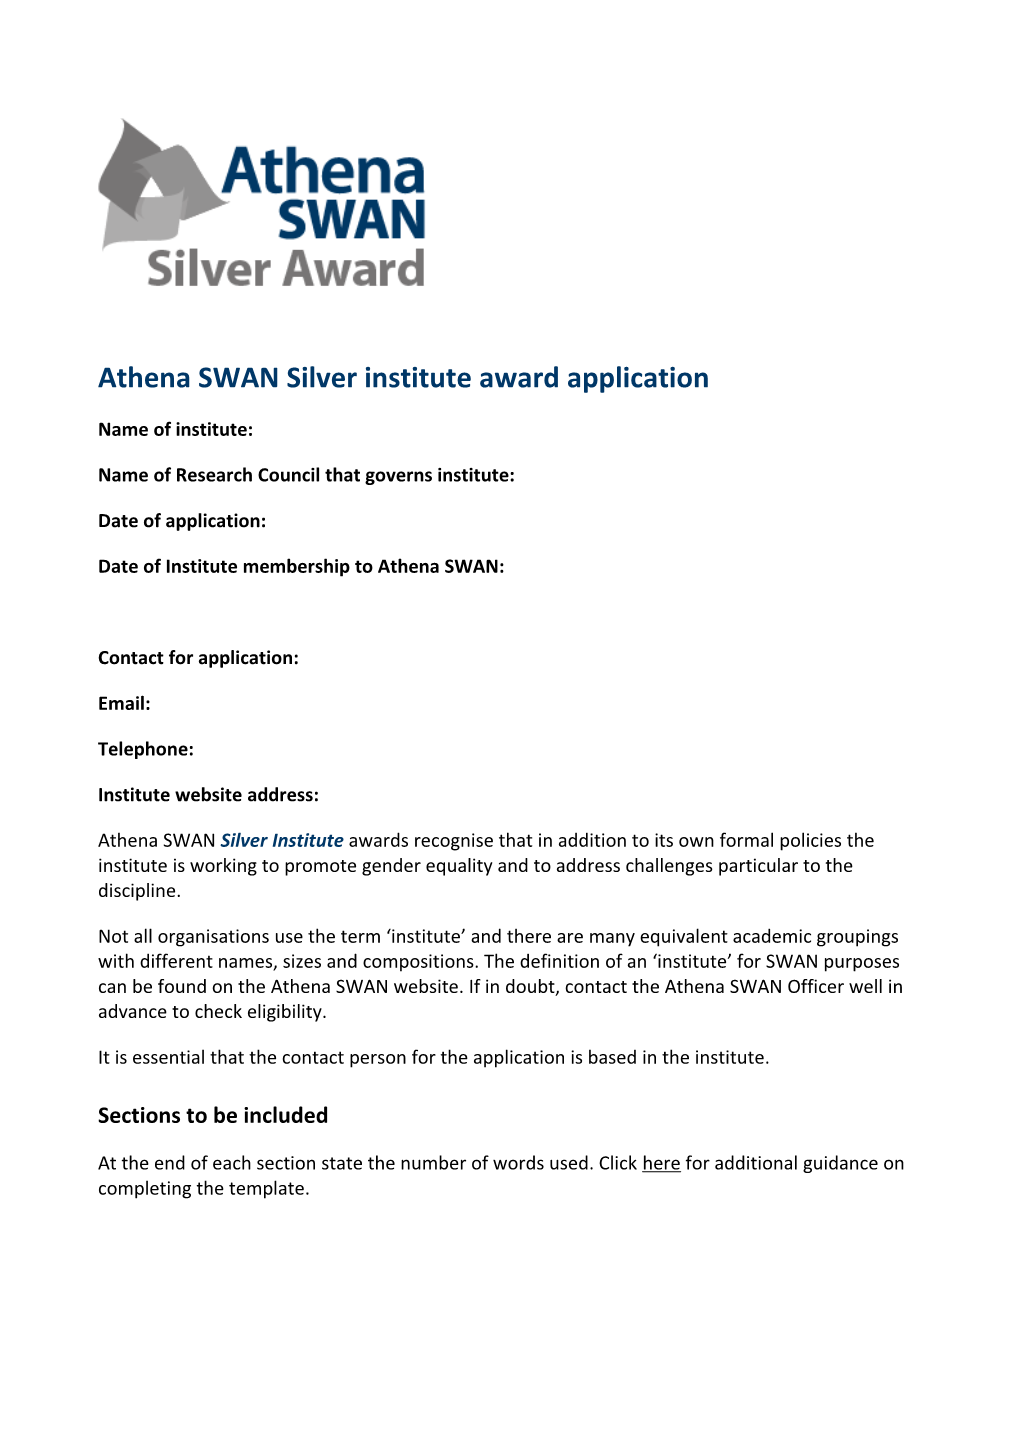 Athena SWAN Silverinstitute Award Application